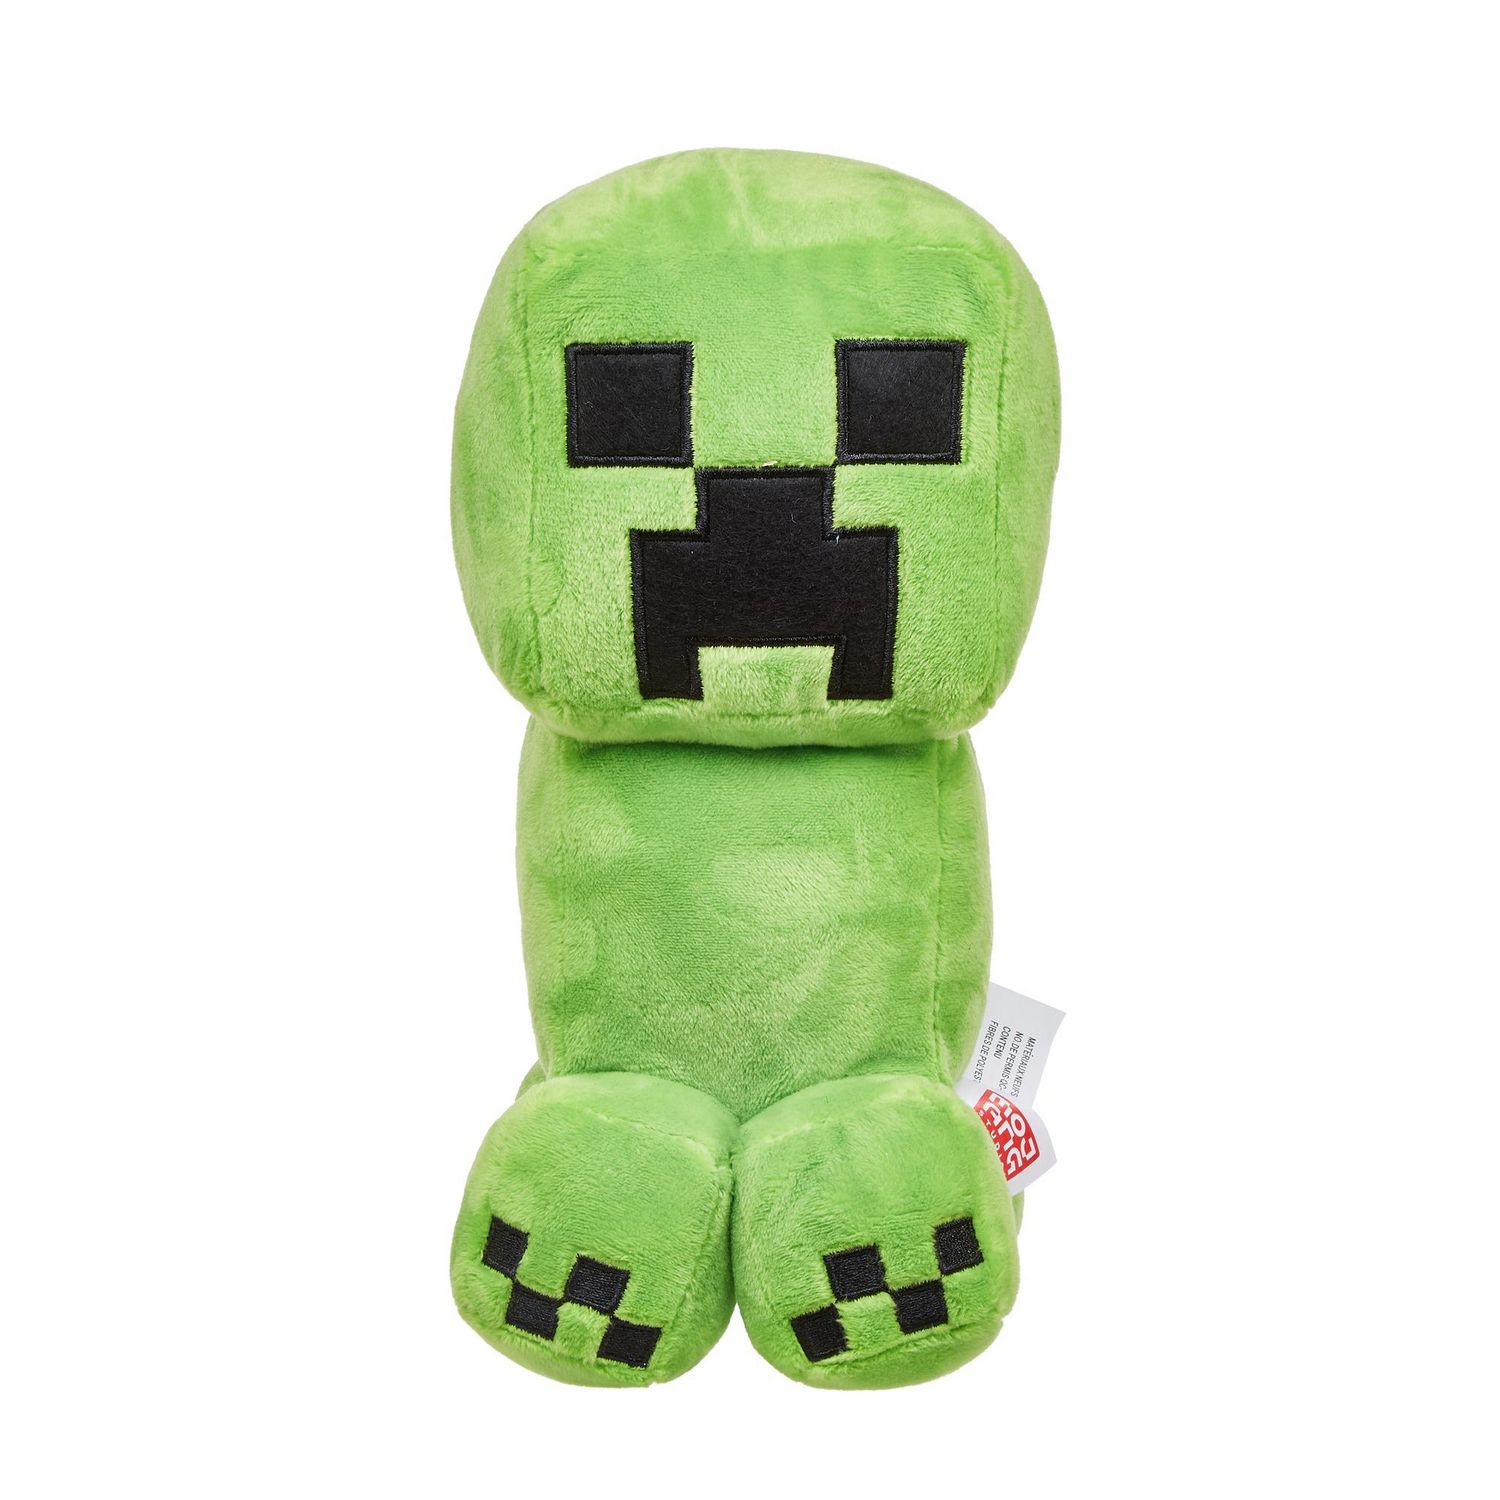 Minecraft Plush Creeper Doll 8-in Plush Dolls, Fan Favorite Characters